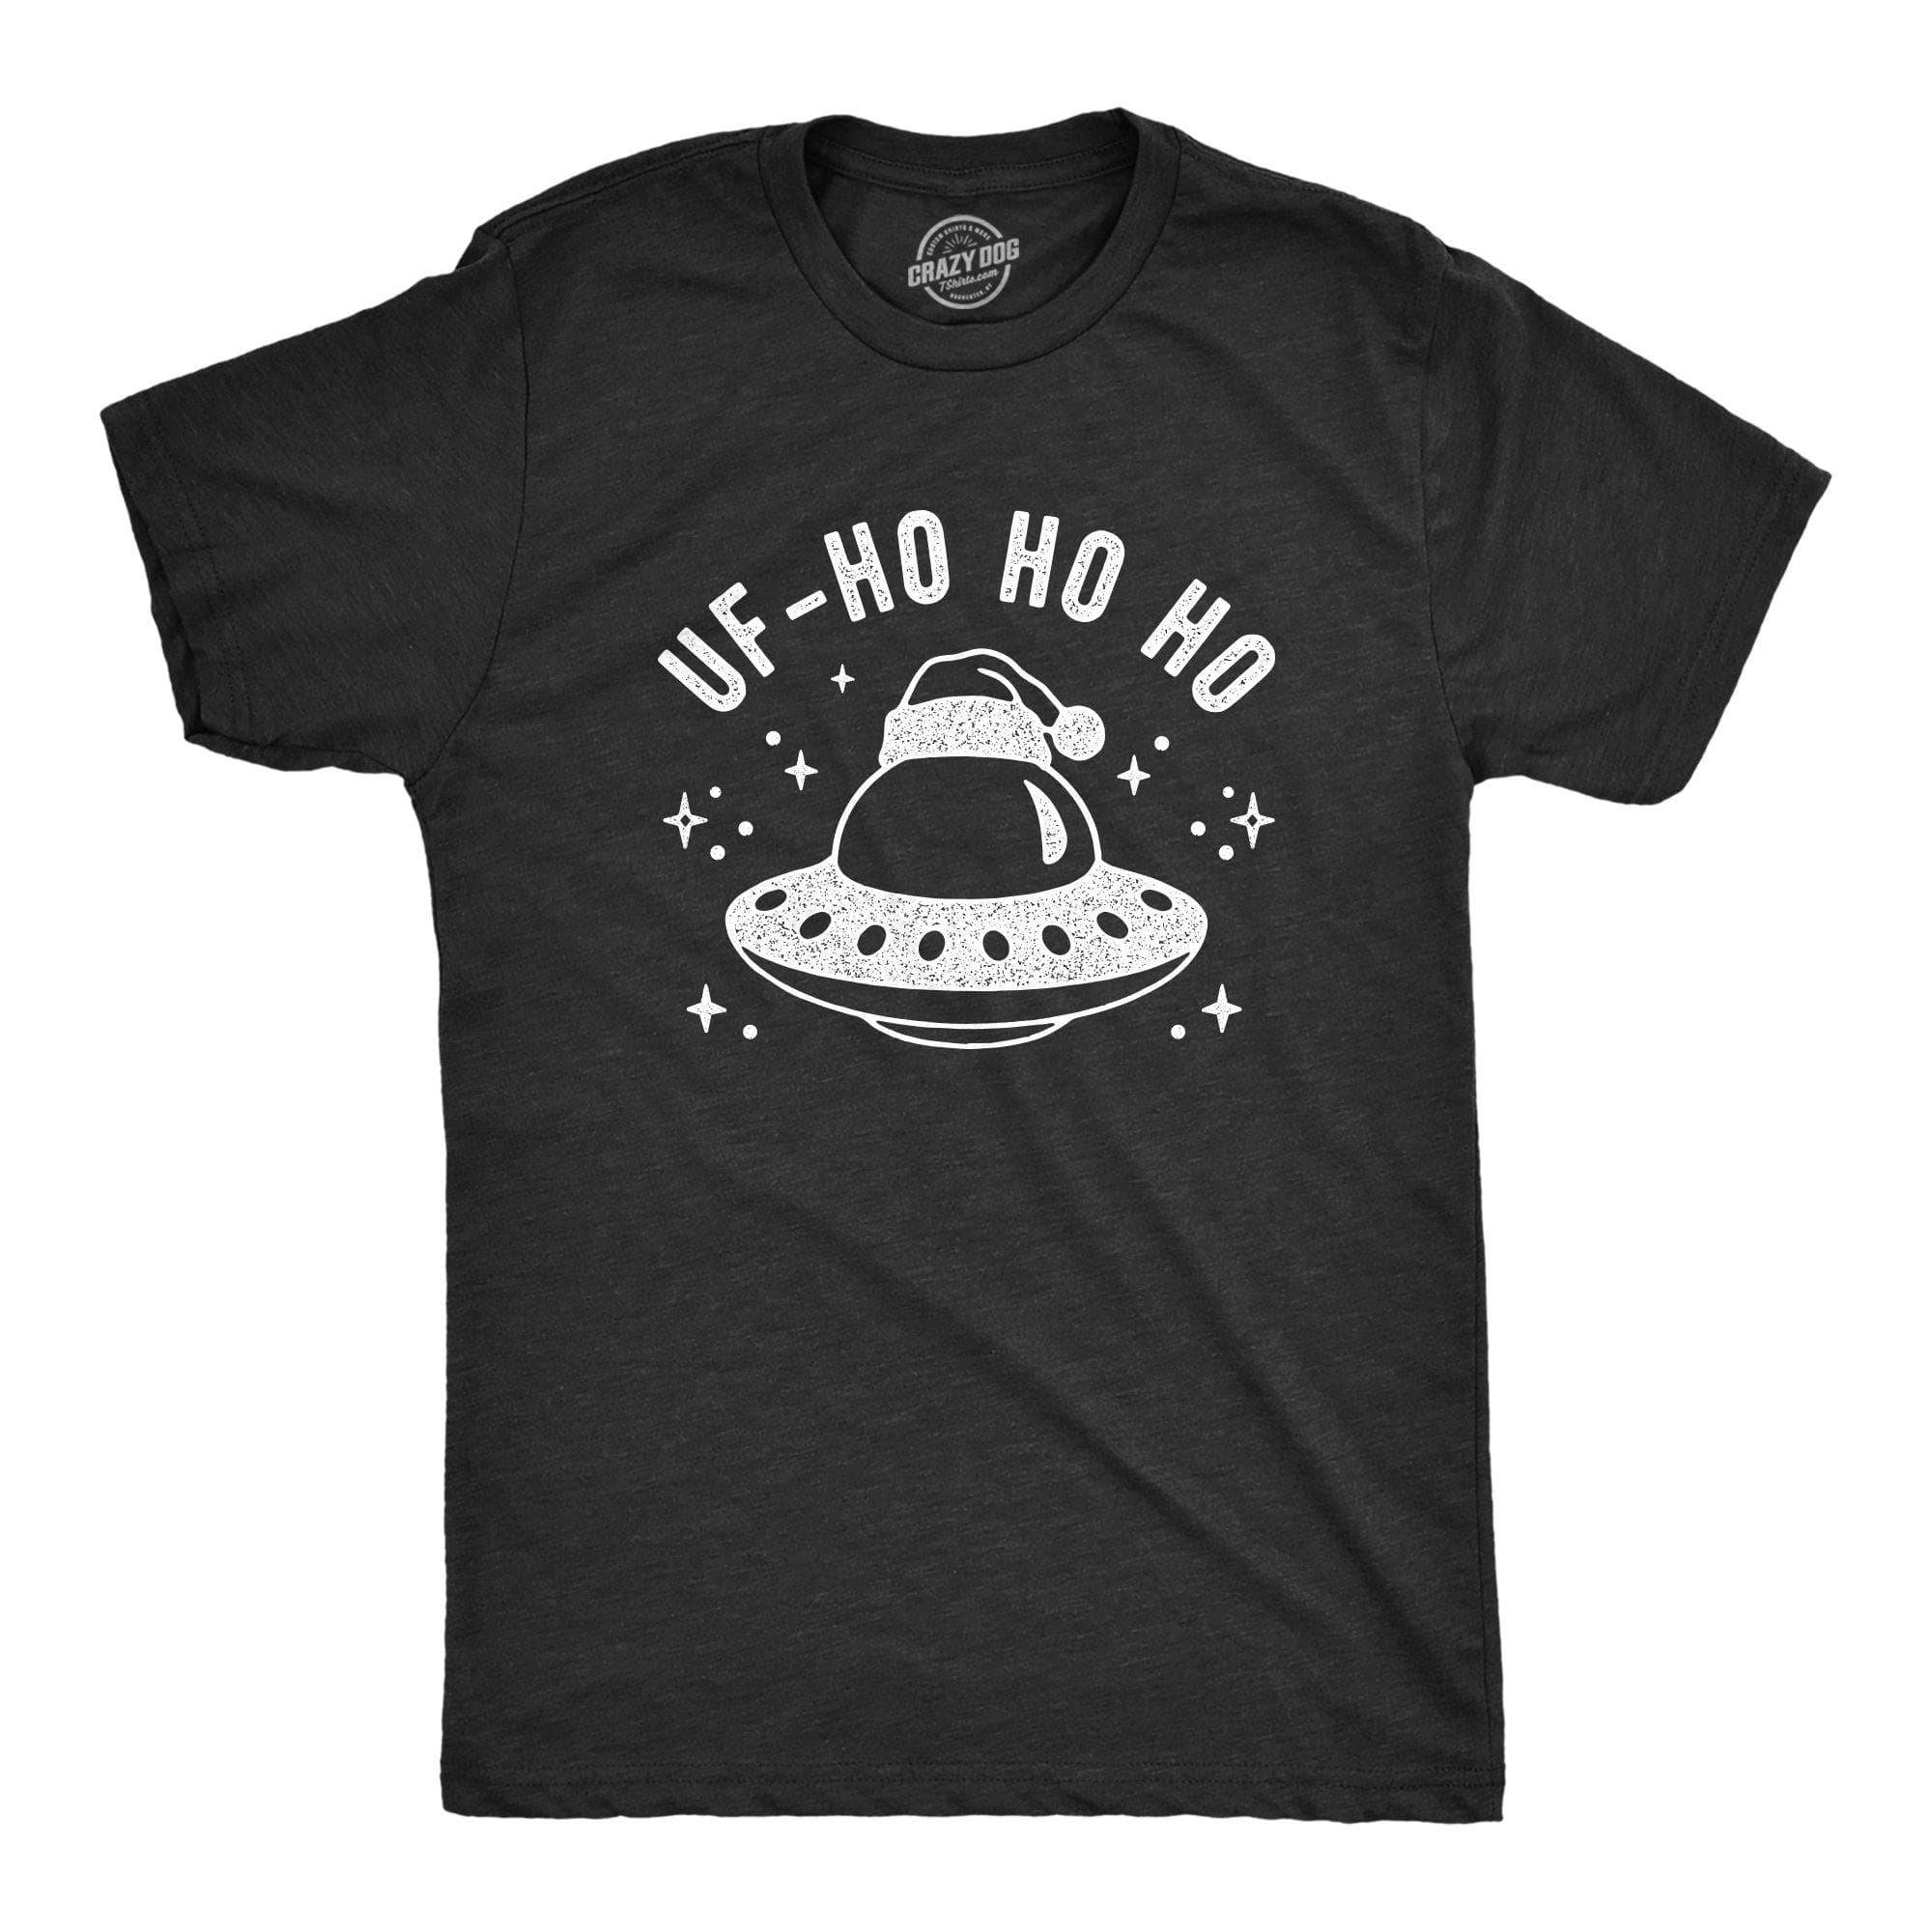 UF-Ho-Ho-Ho Men's Tshirt - Crazy Dog T-Shirts